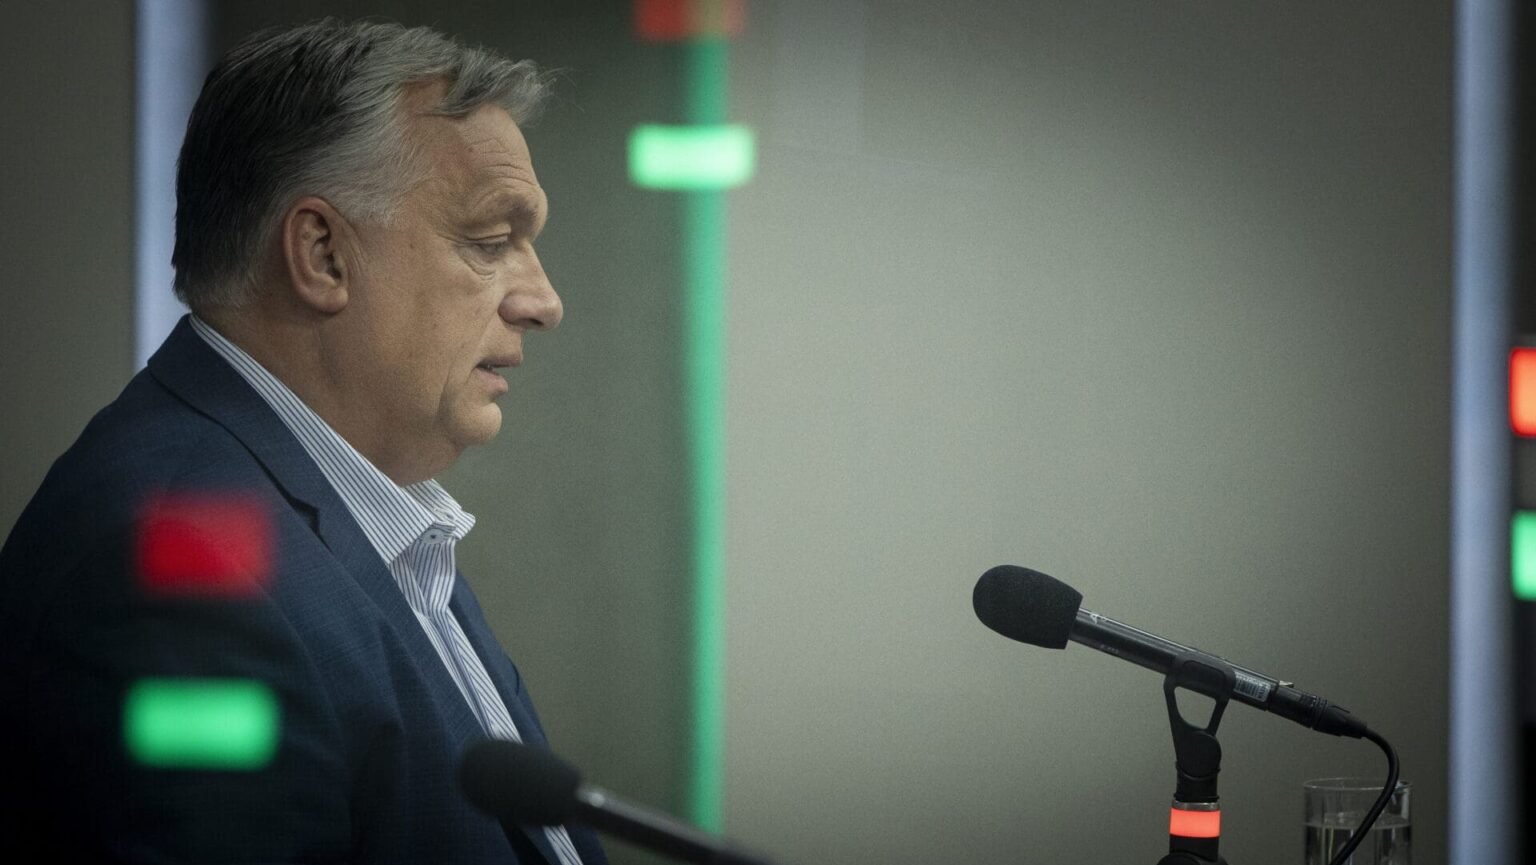 PM Orbán: EU Ideological Leadership Greater Threat to Europe Than Vladimir Putin